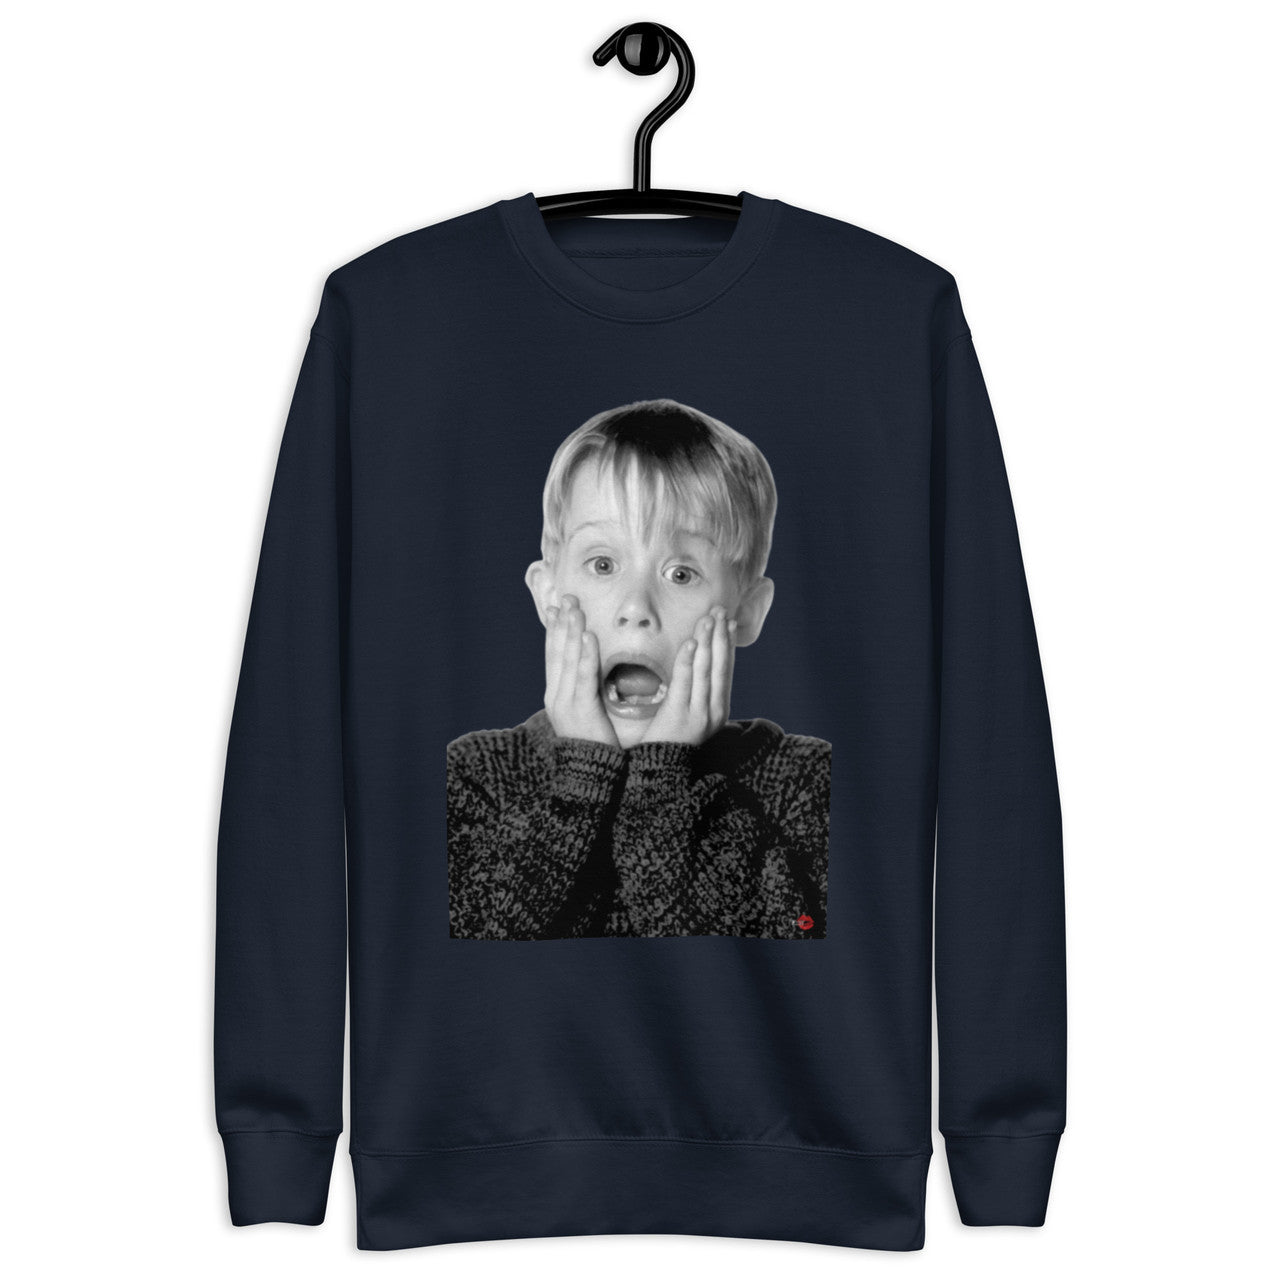 Kevin KiSS Unisex Premium Sweatshirt - Home Alone Face Christmas inspired Macaulay Culkin